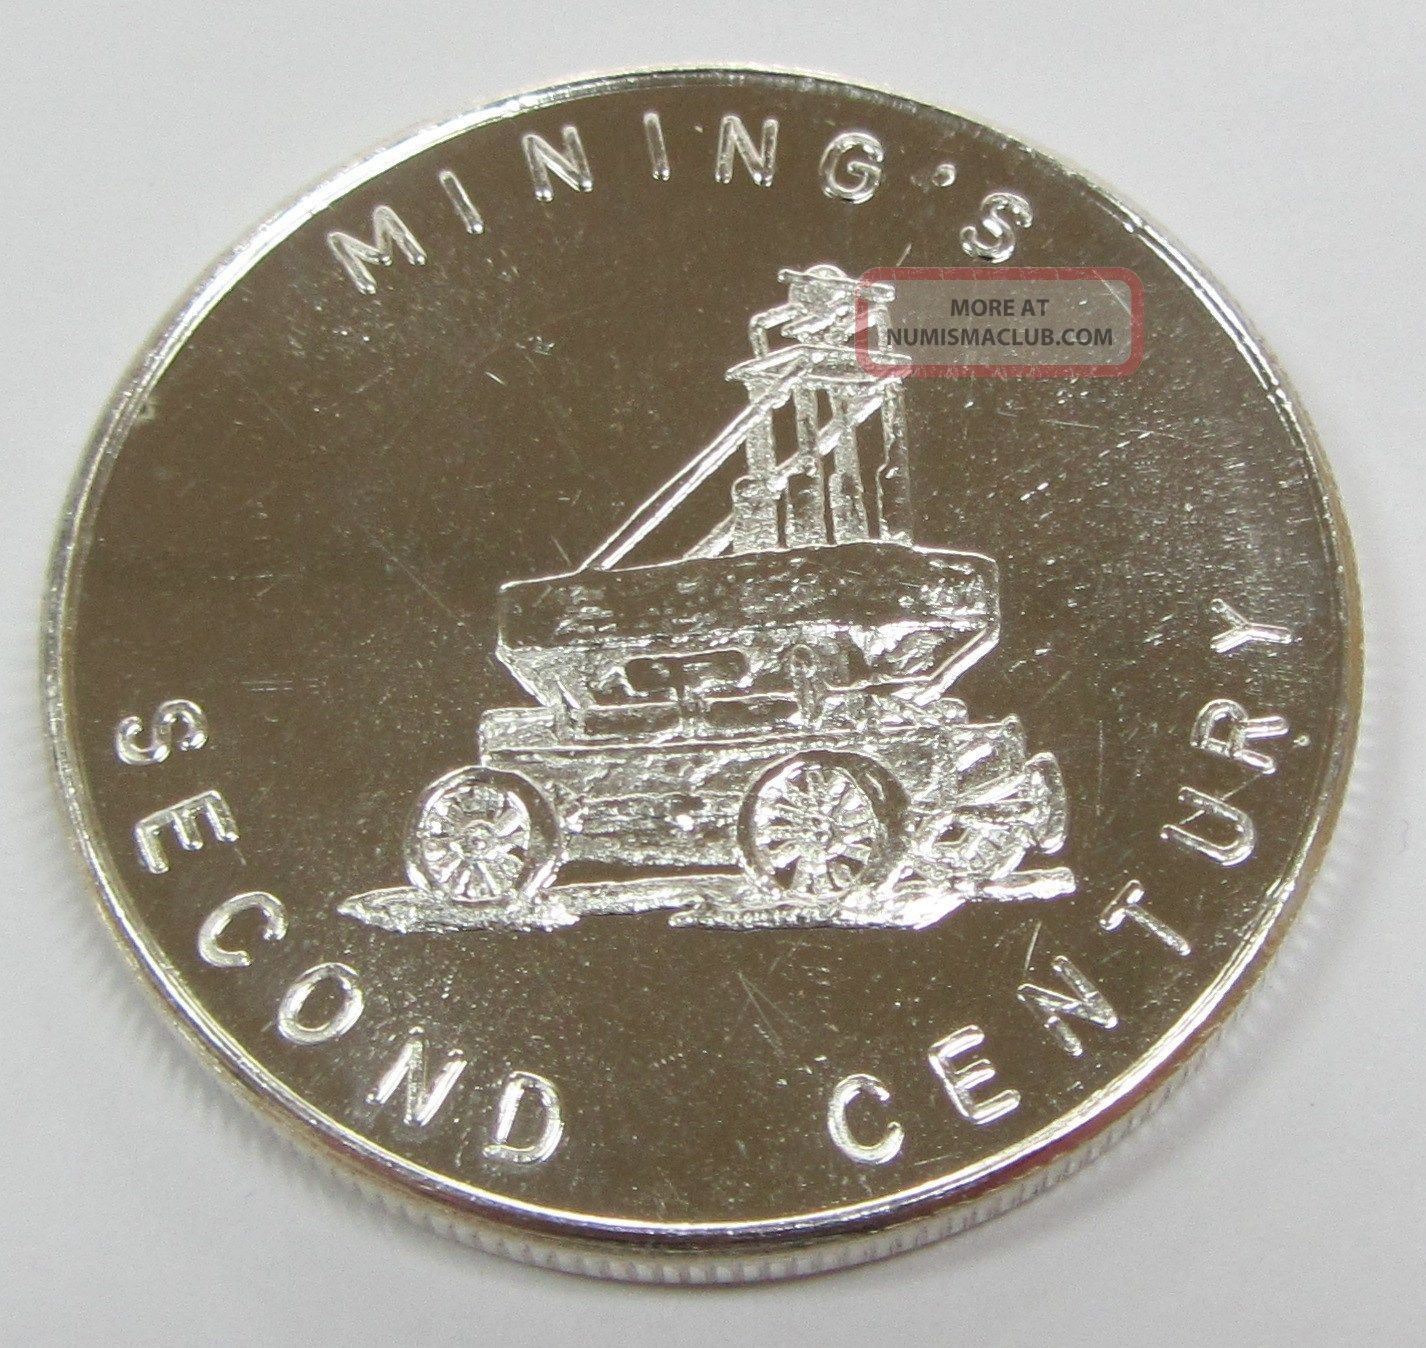 Rare 1988 Montana Mining ' S Second Century 1 Oz. 999 Fine Silver Round